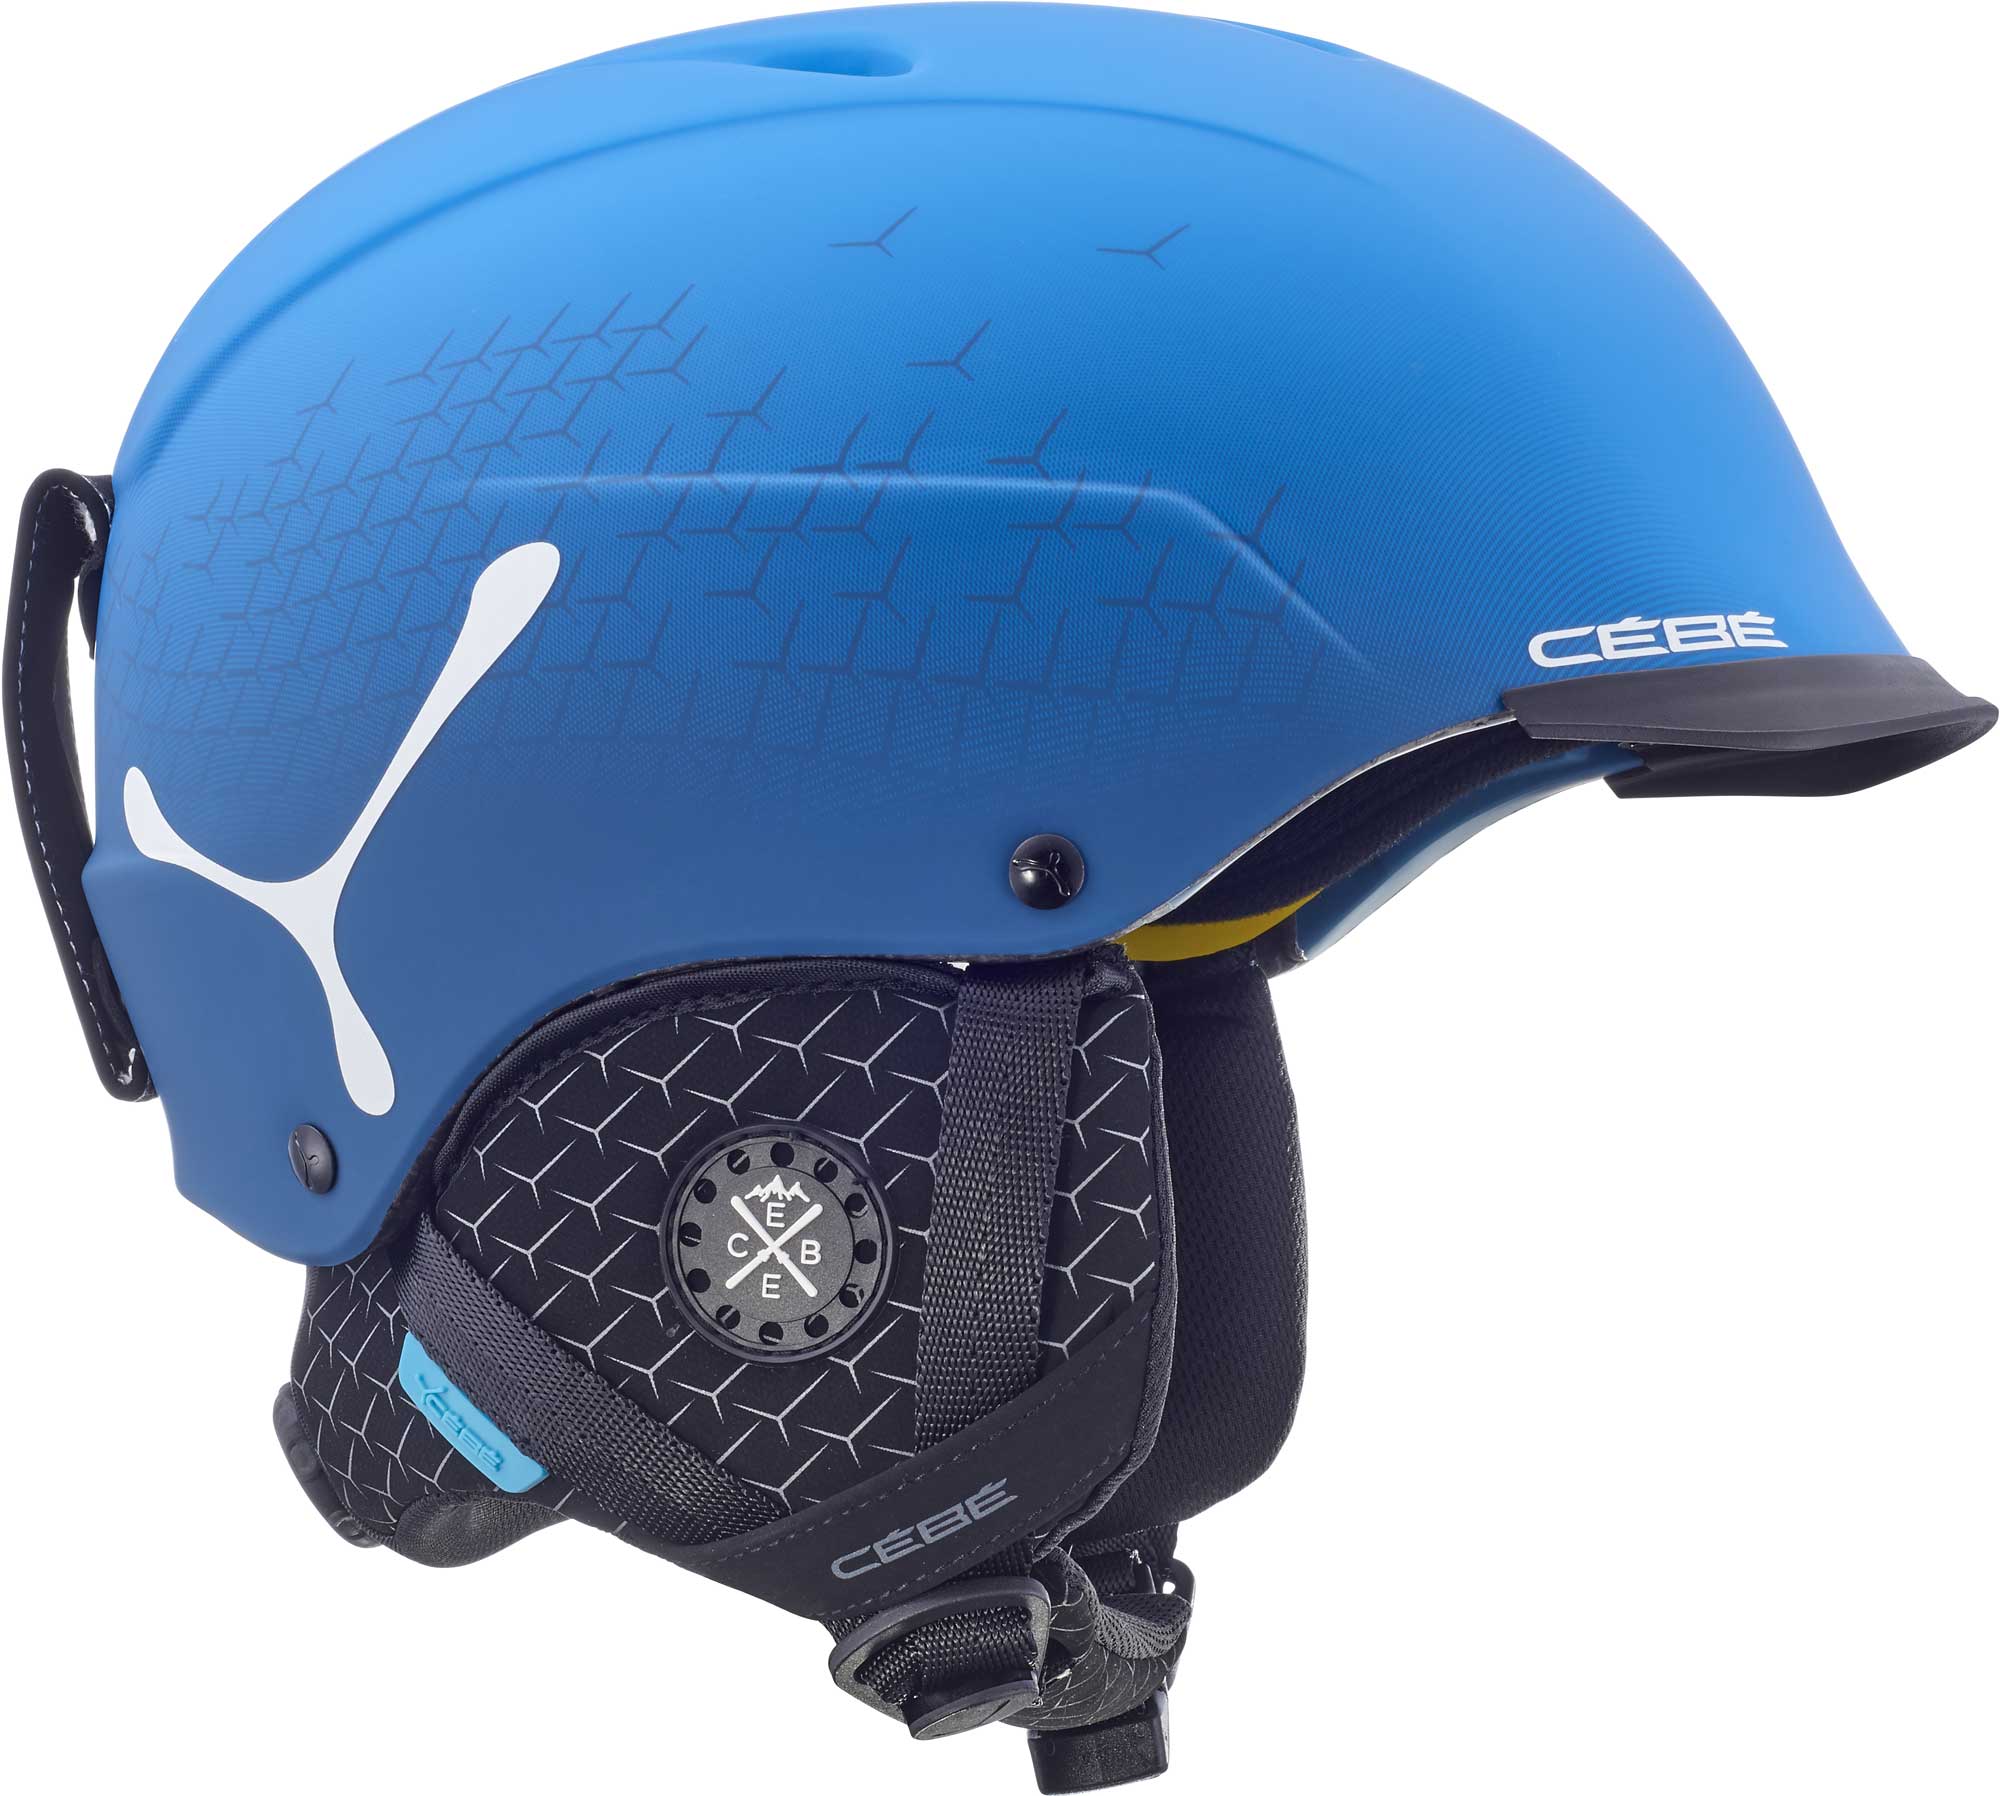 Downhill ski helmet